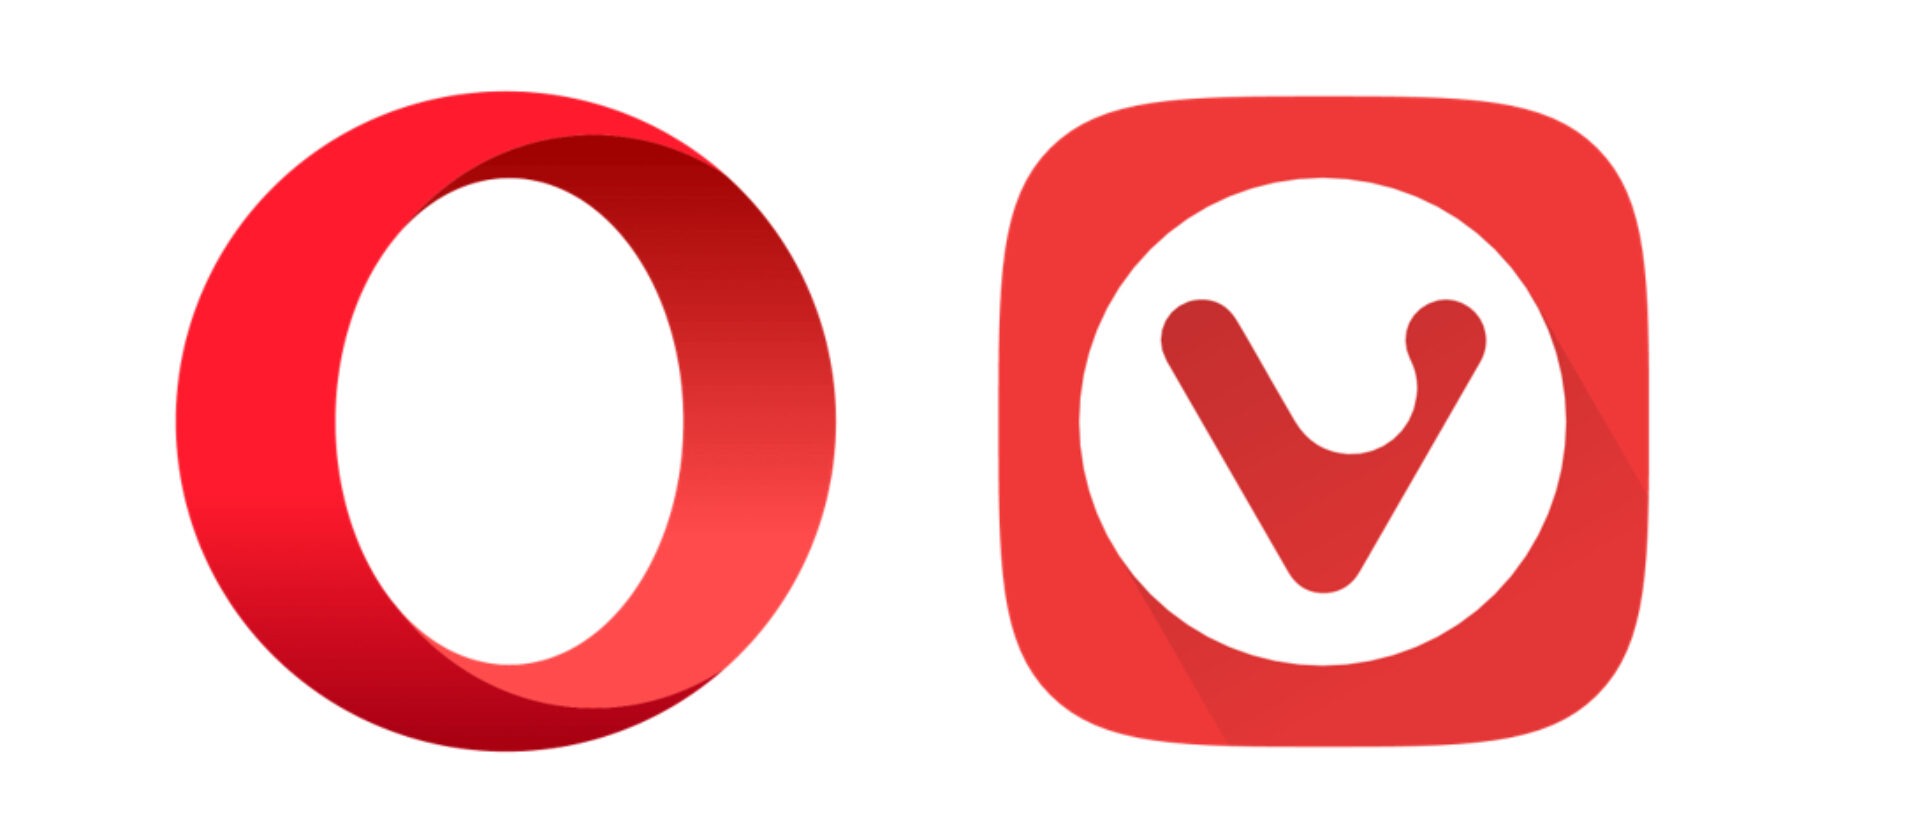 Browser Opera neben dem Browser Vivaldi